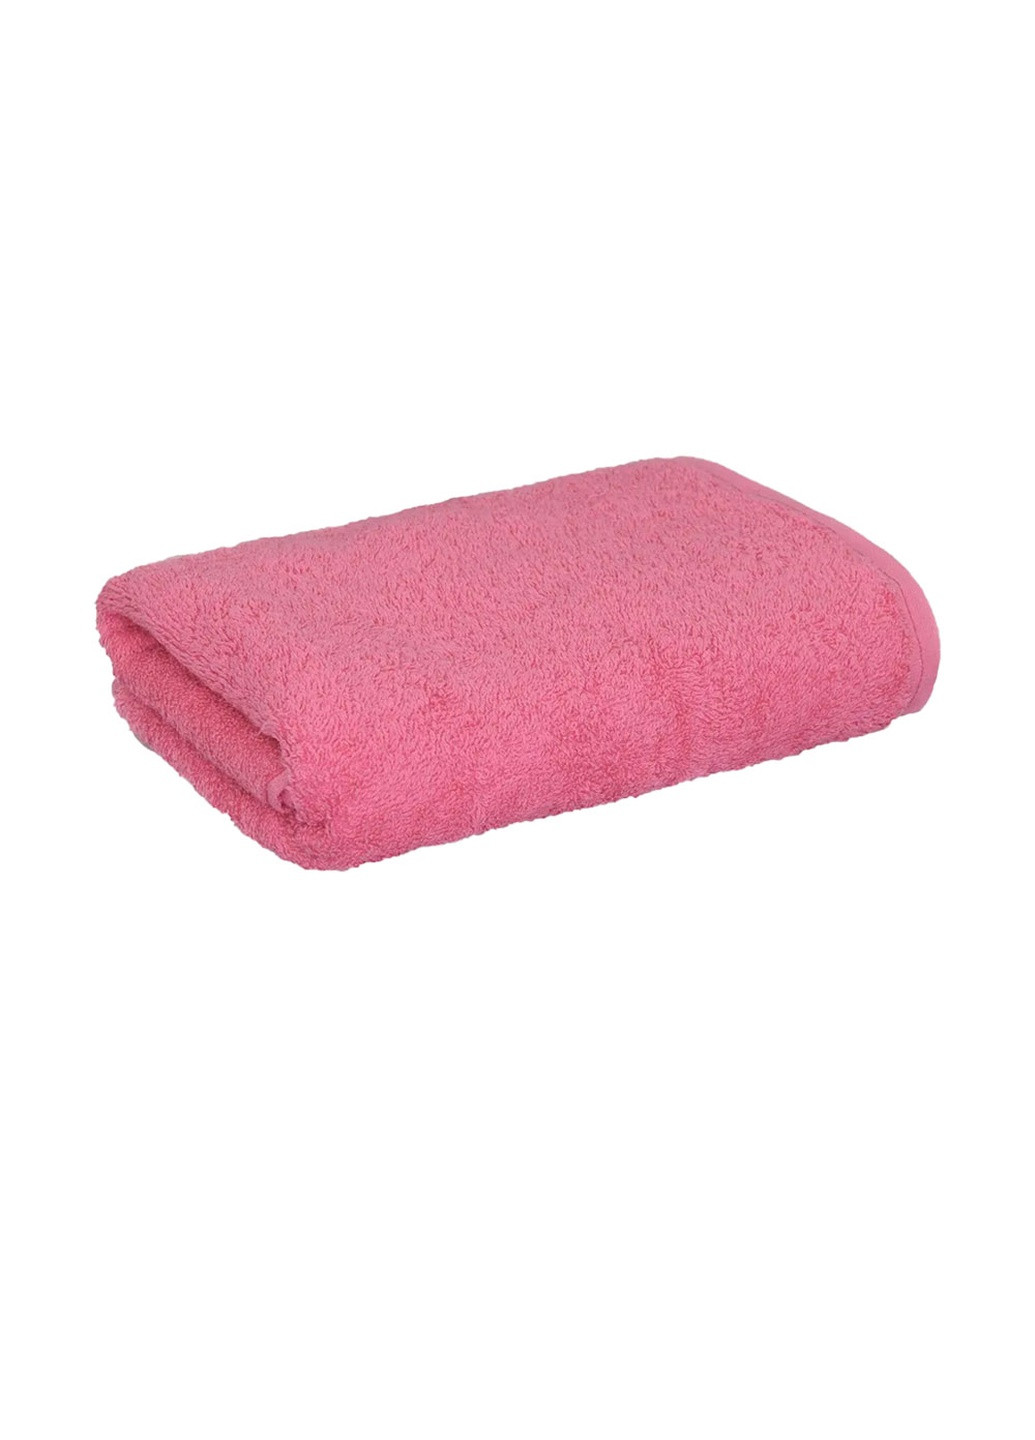 Ярослав махровое полотенце розовый производство - Украина